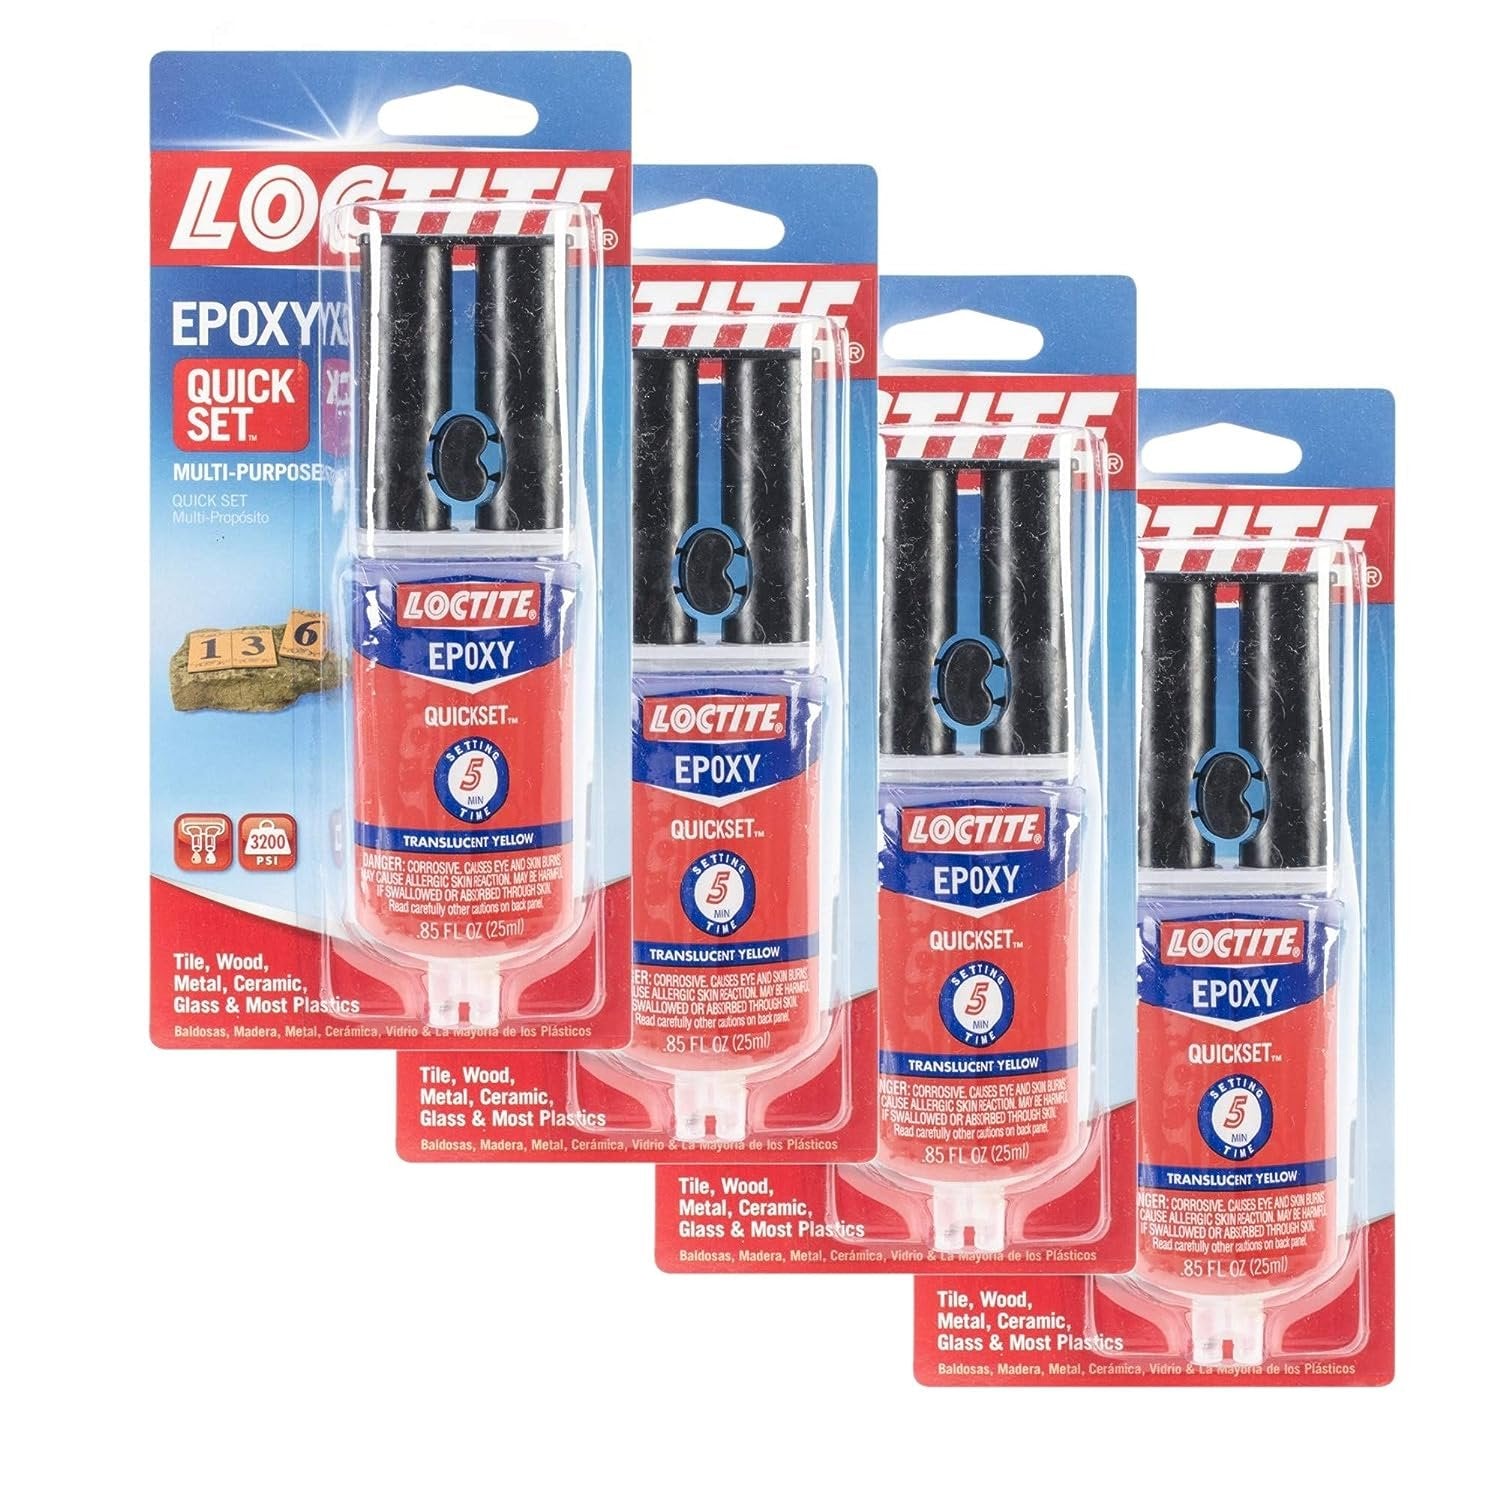 Loctite Epoxy Quick Set 0.85-Fluid Ounce Syringe (1395391) - 4 Pack